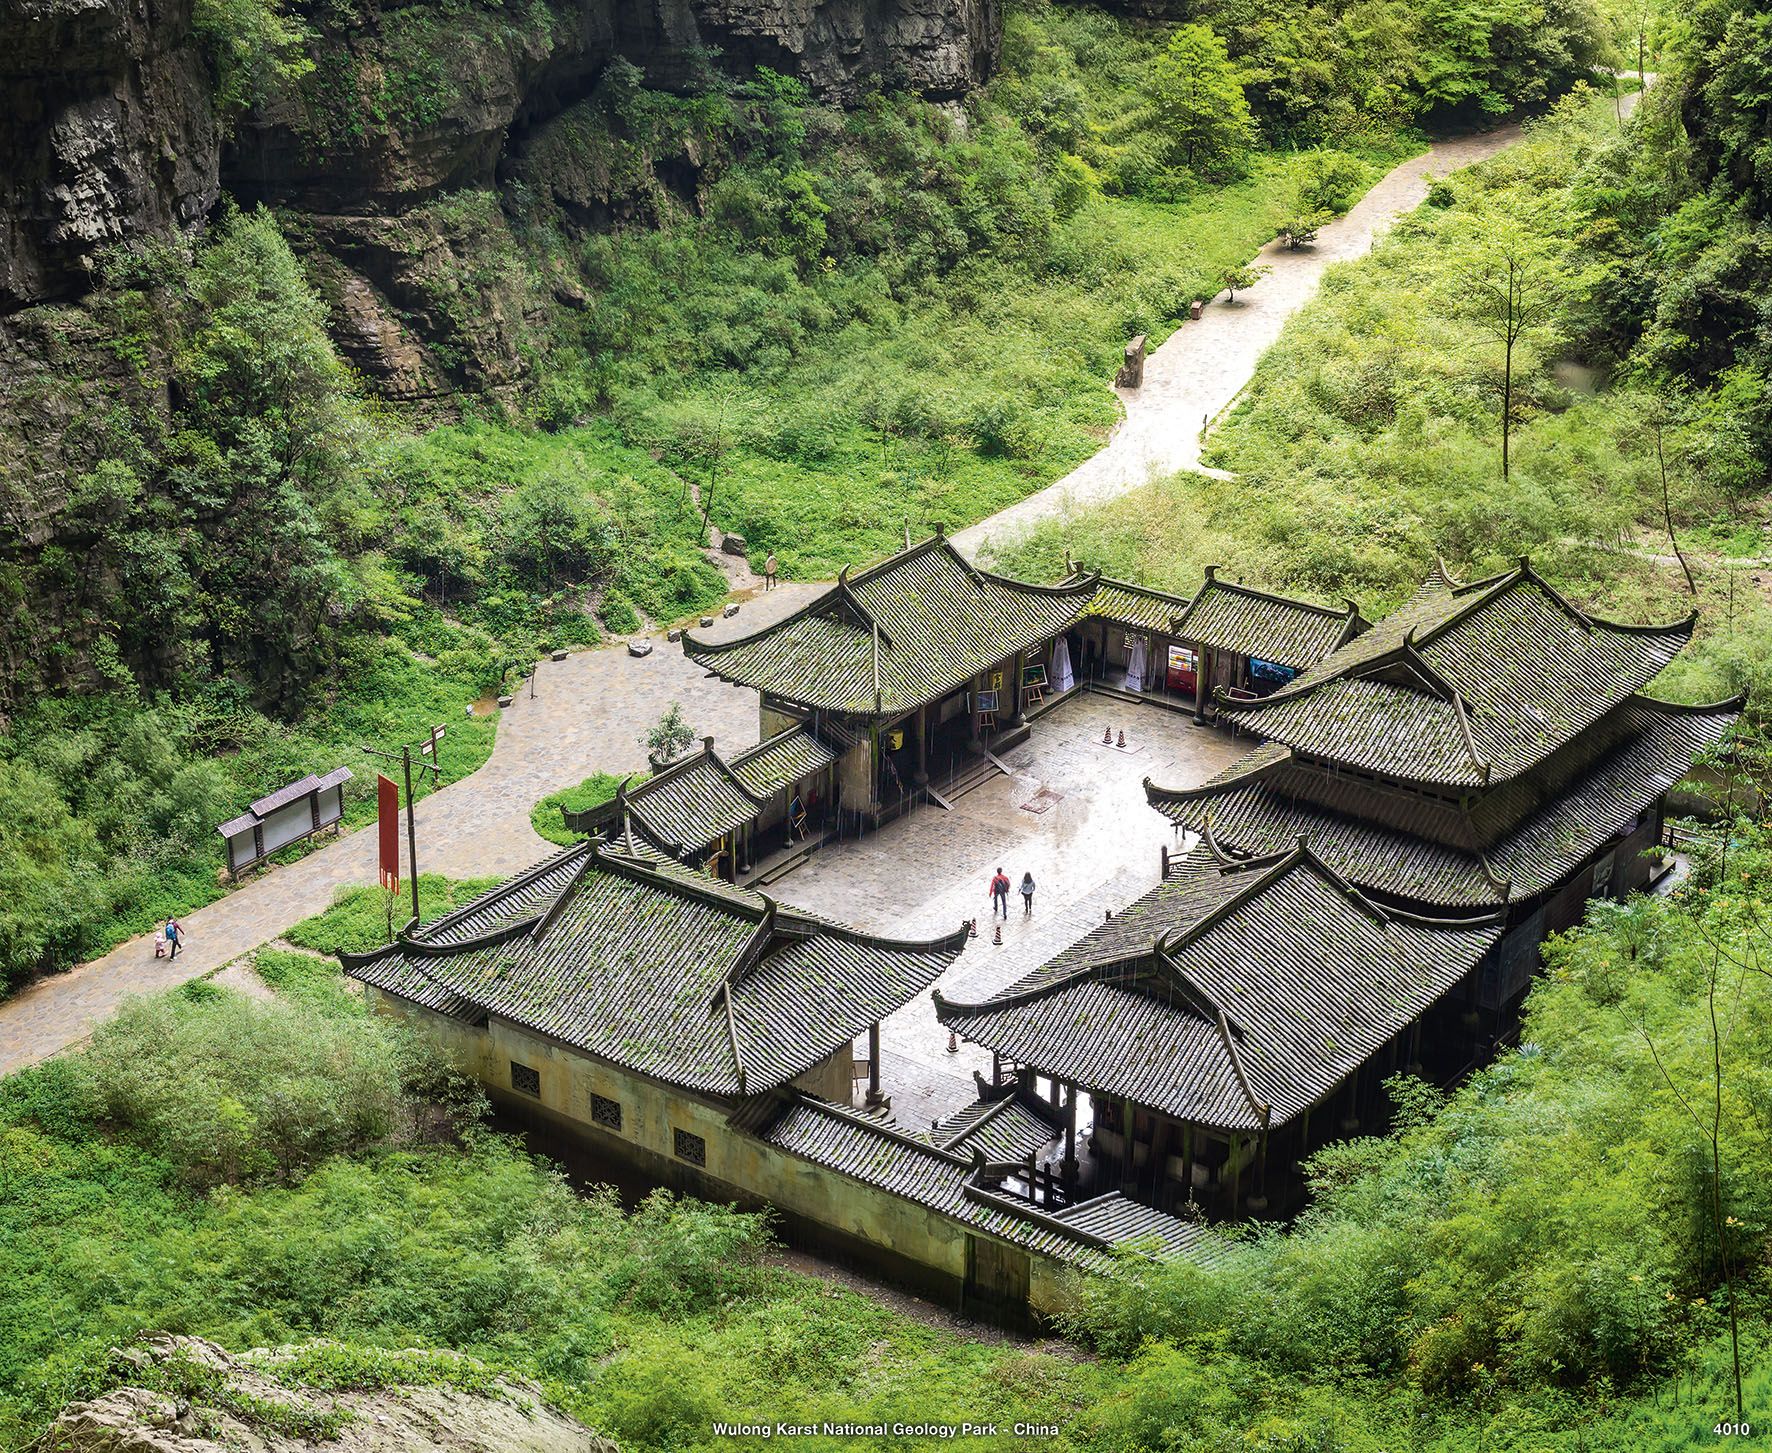 4010_Wulong Karst National Geology Park - China